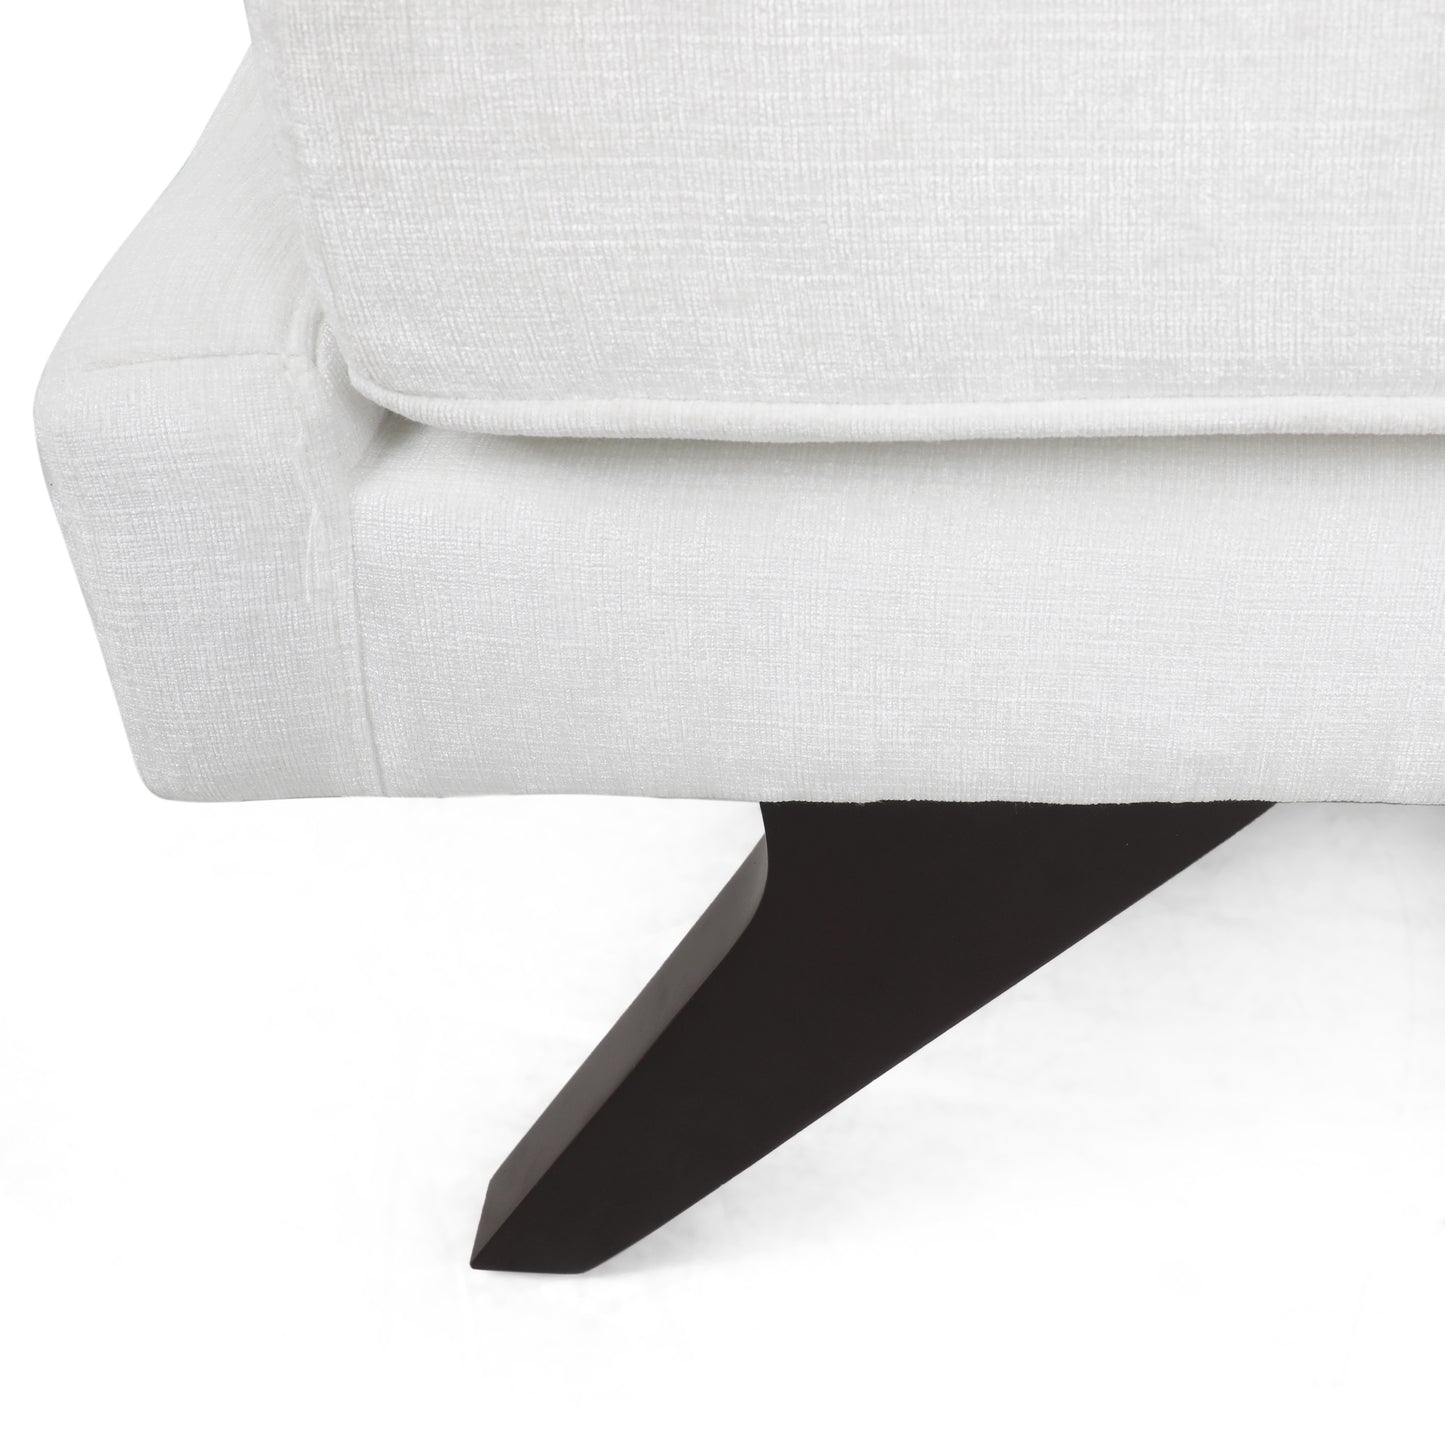 Alphonso Mid-Century Modern Fabric Chaise Lounge